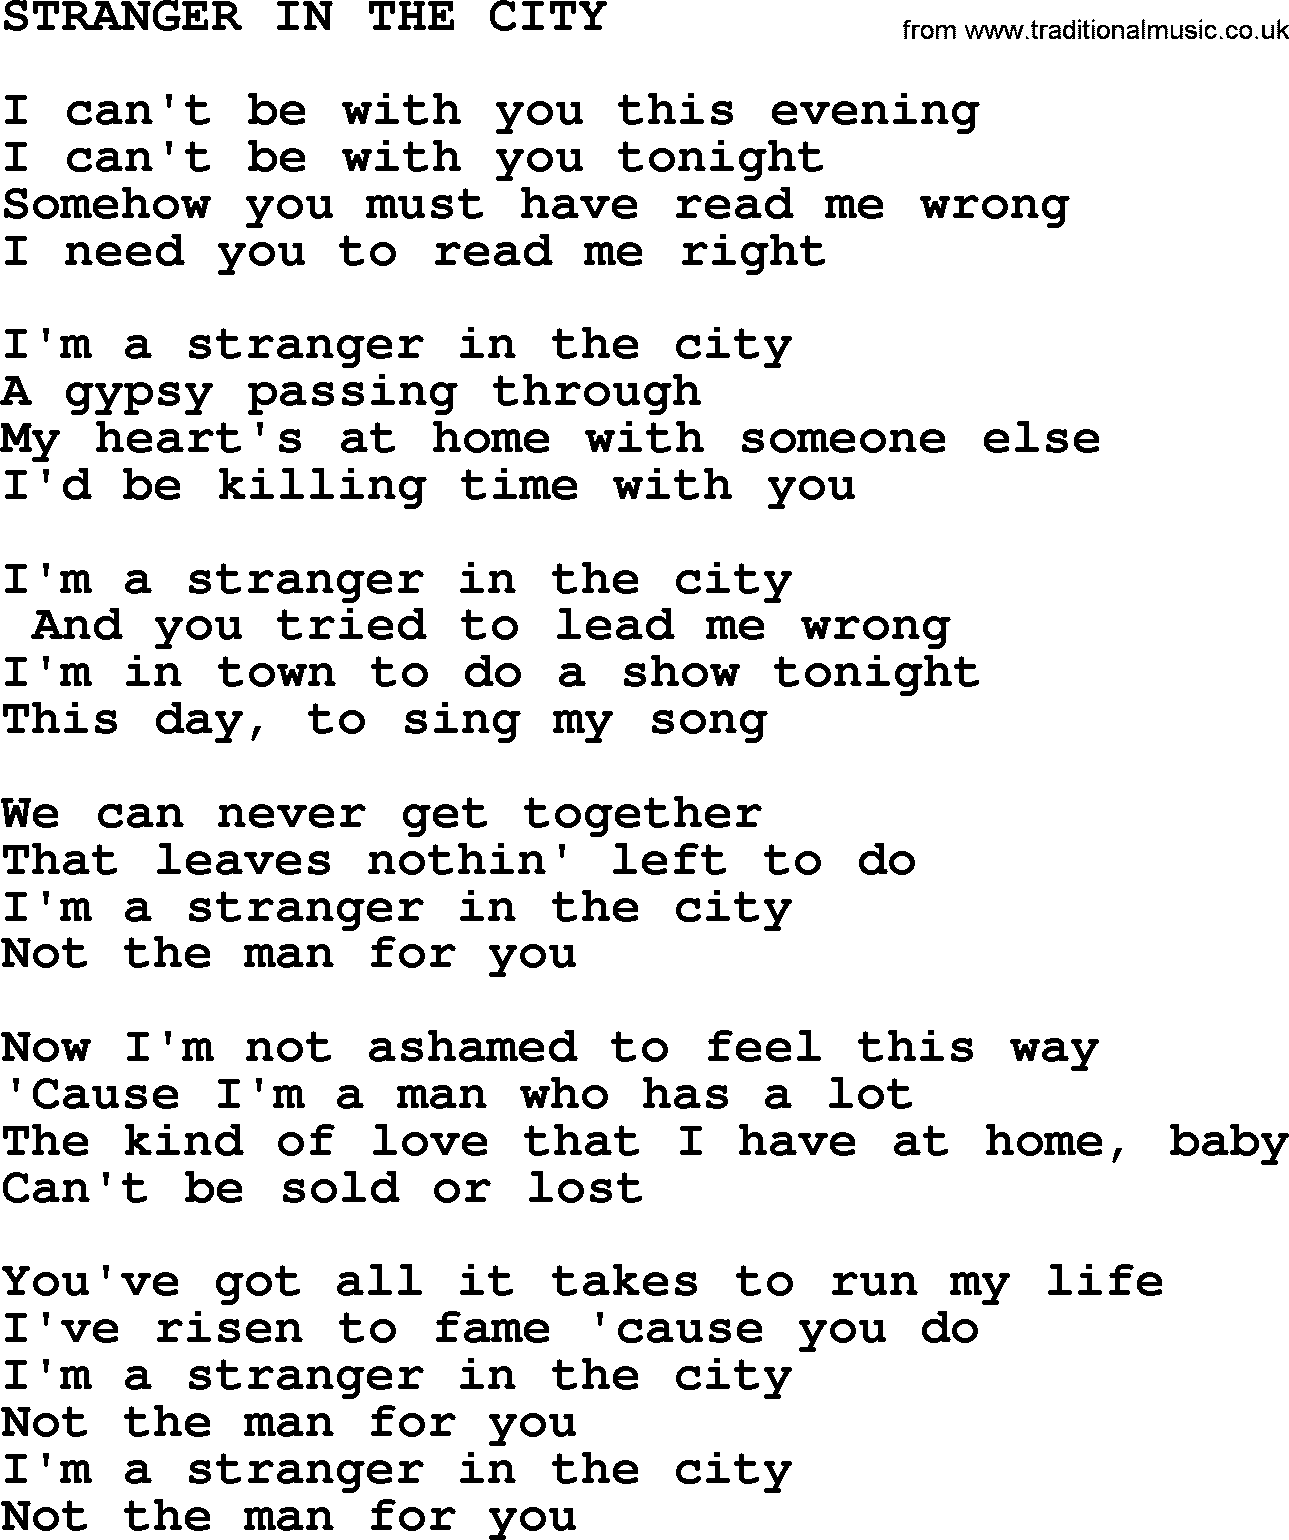 Merle Haggard song: Stranger In The City, lyrics.